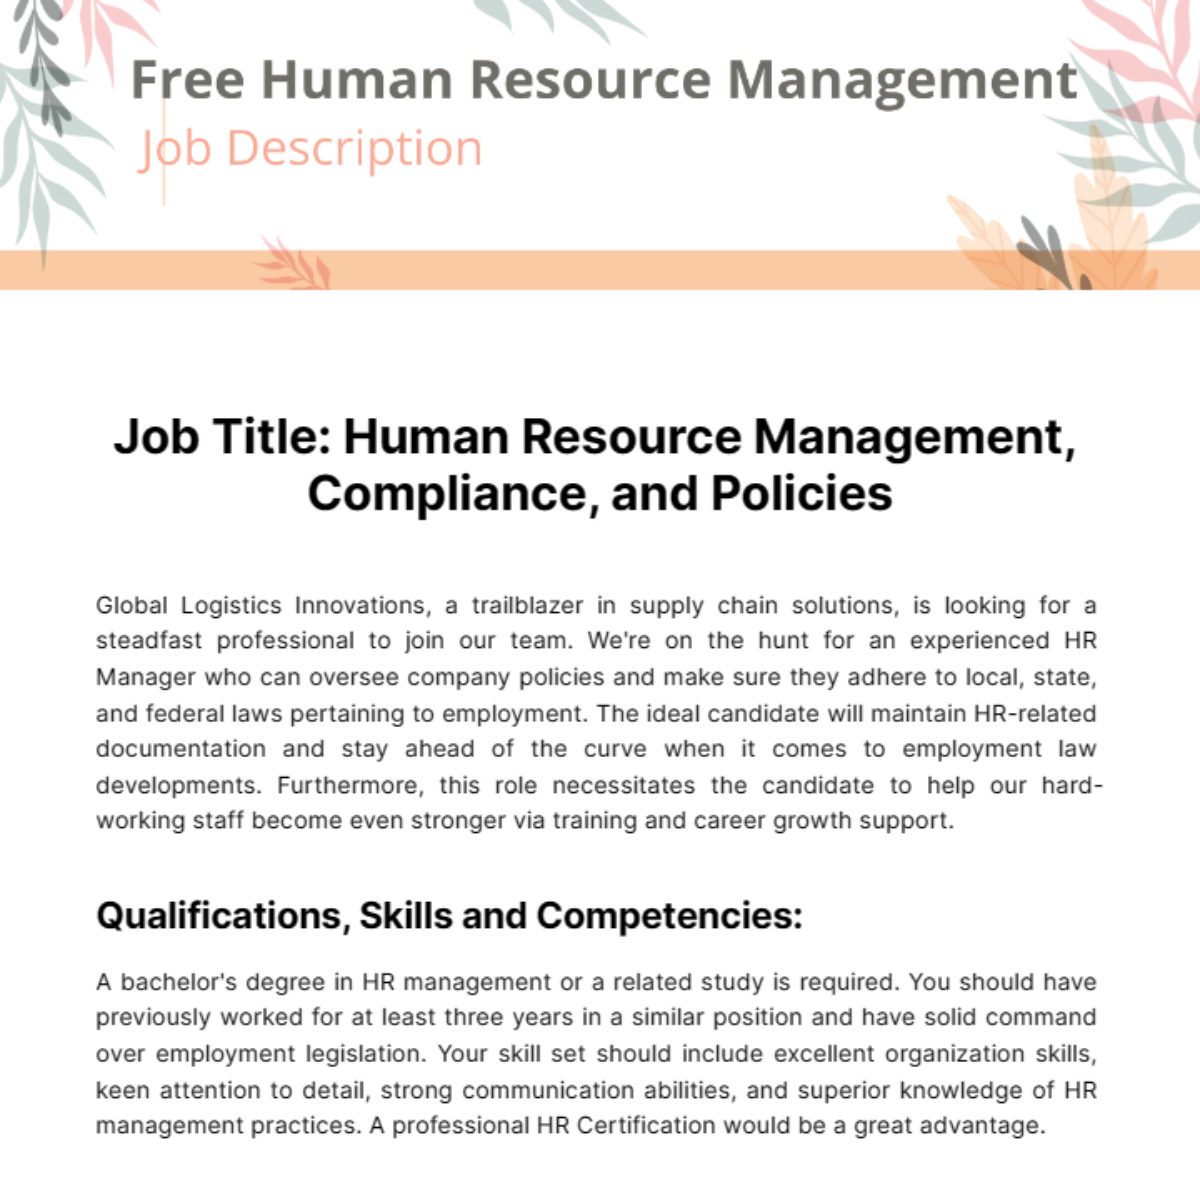 Human Resource Management Job Description Template